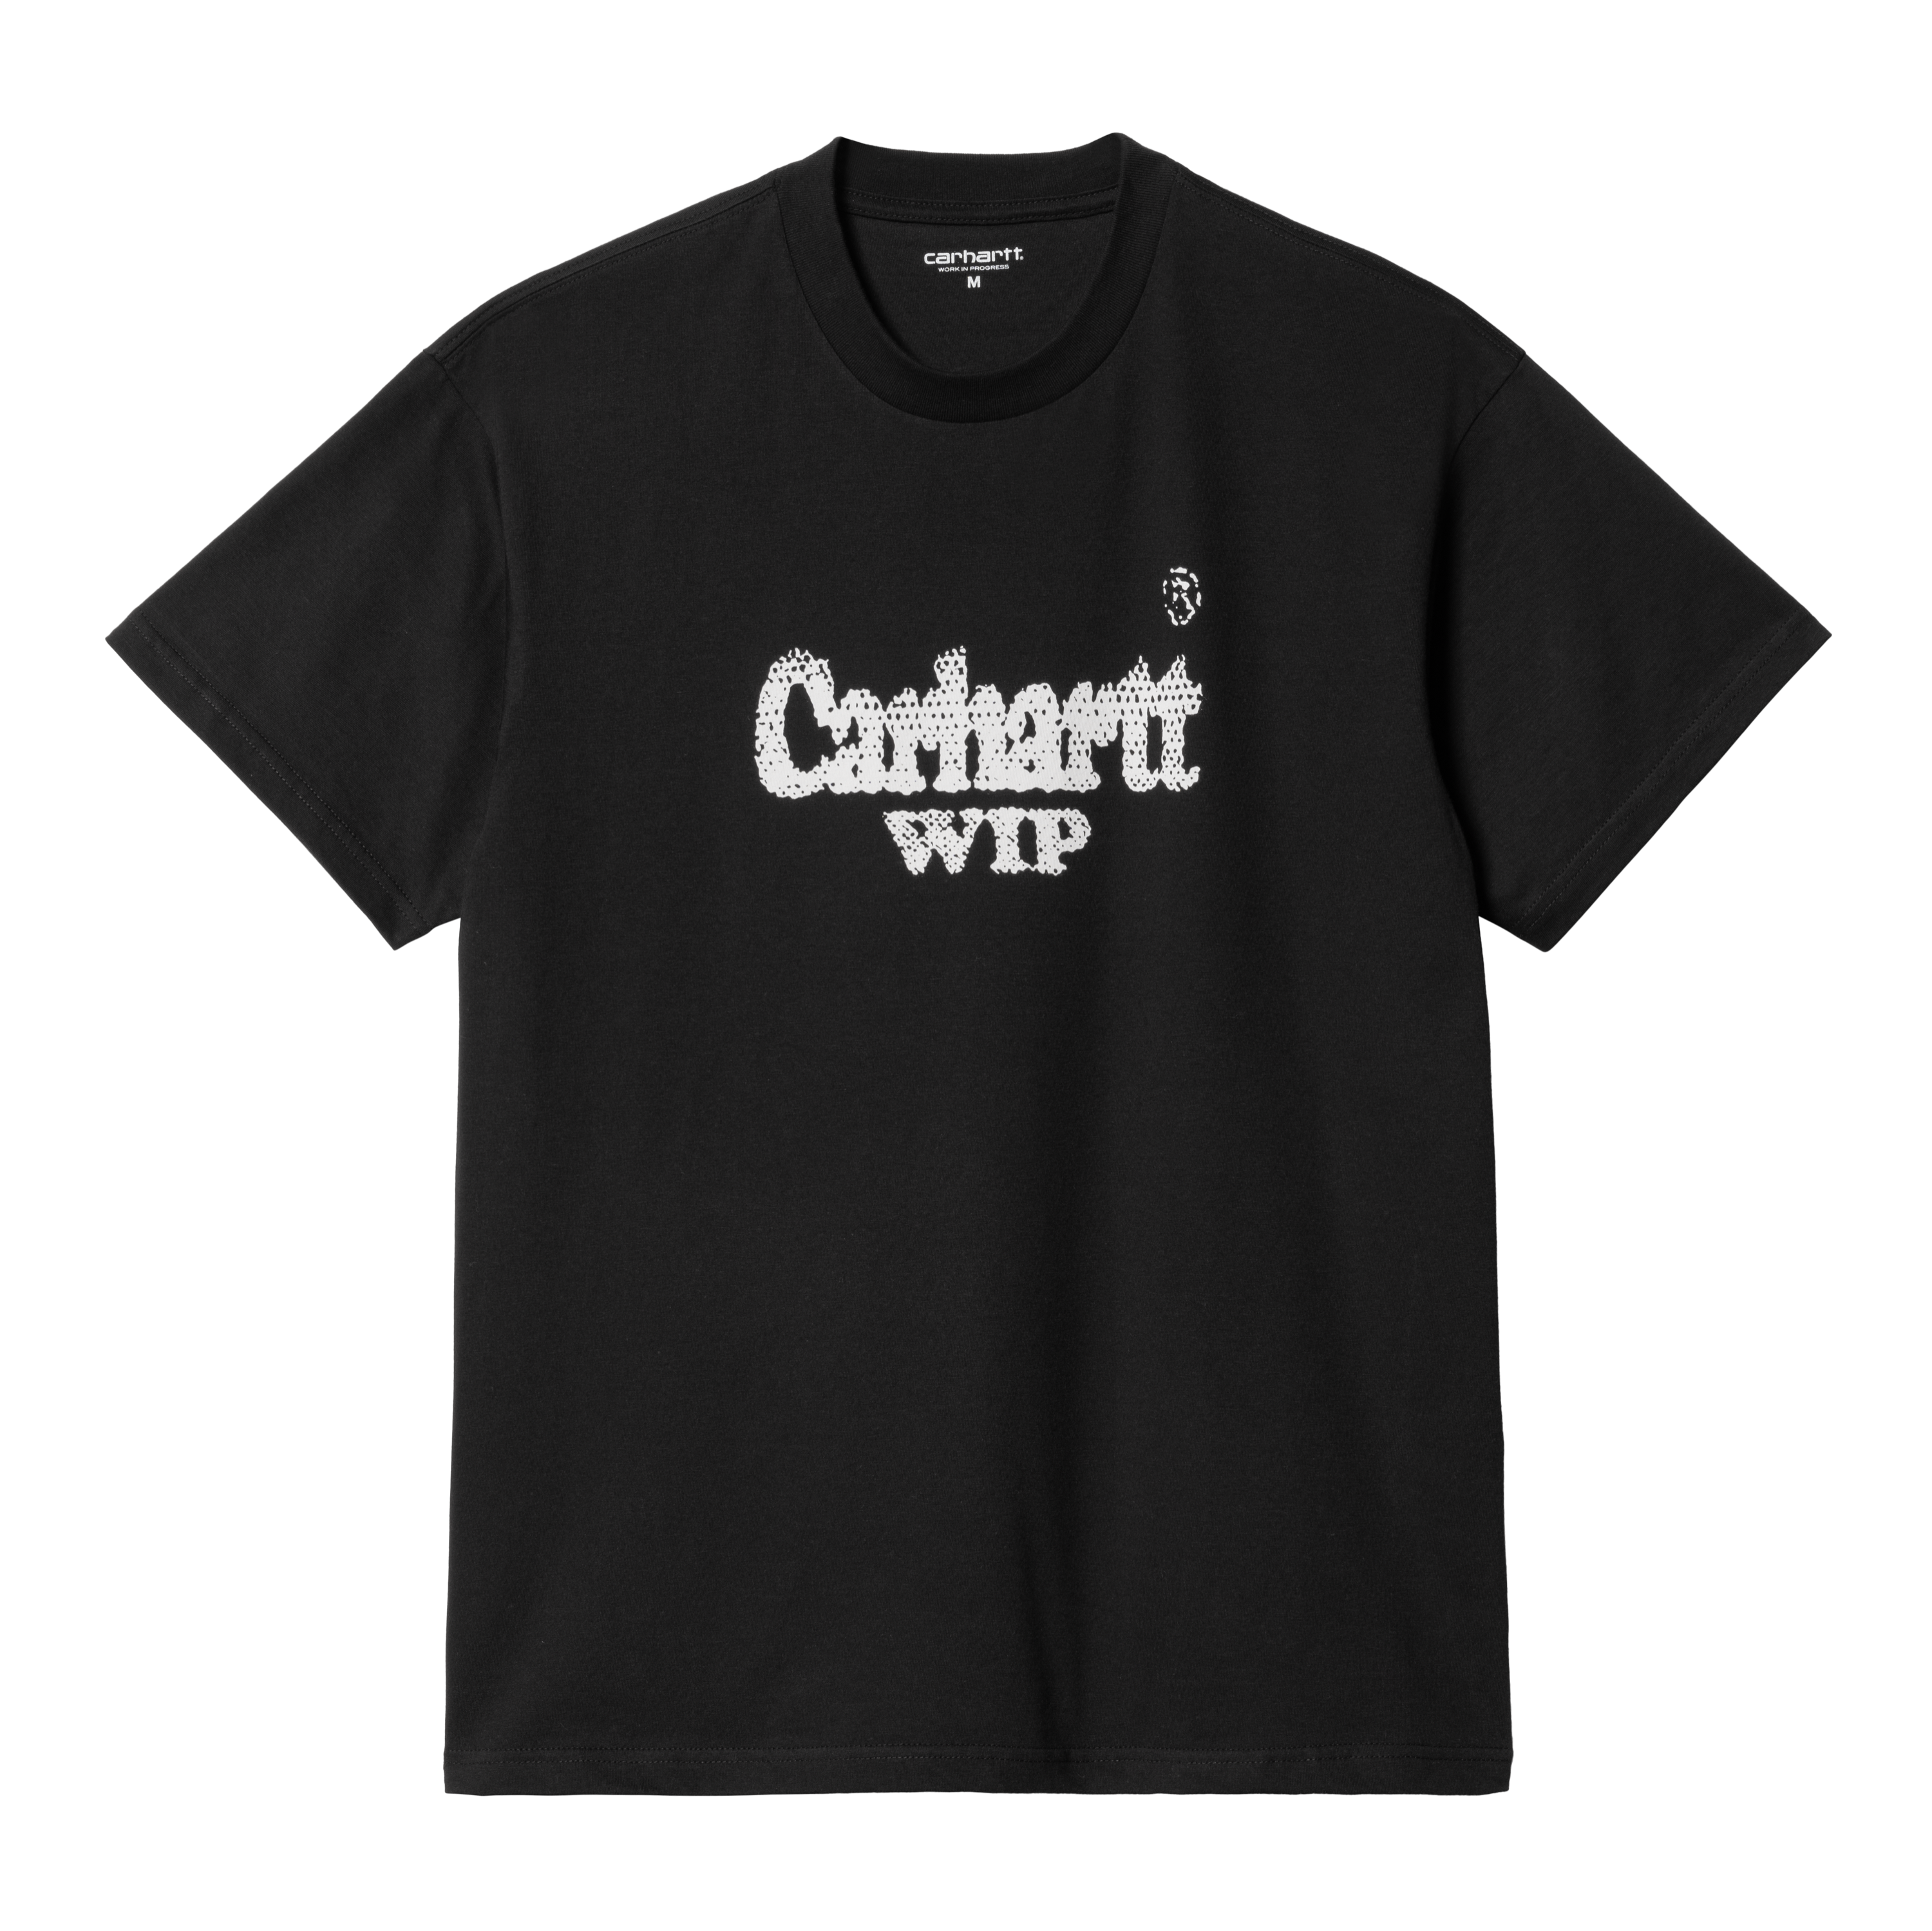 Carhartt WIP Short Sleeve Spree Halftone T-Shirt in Black